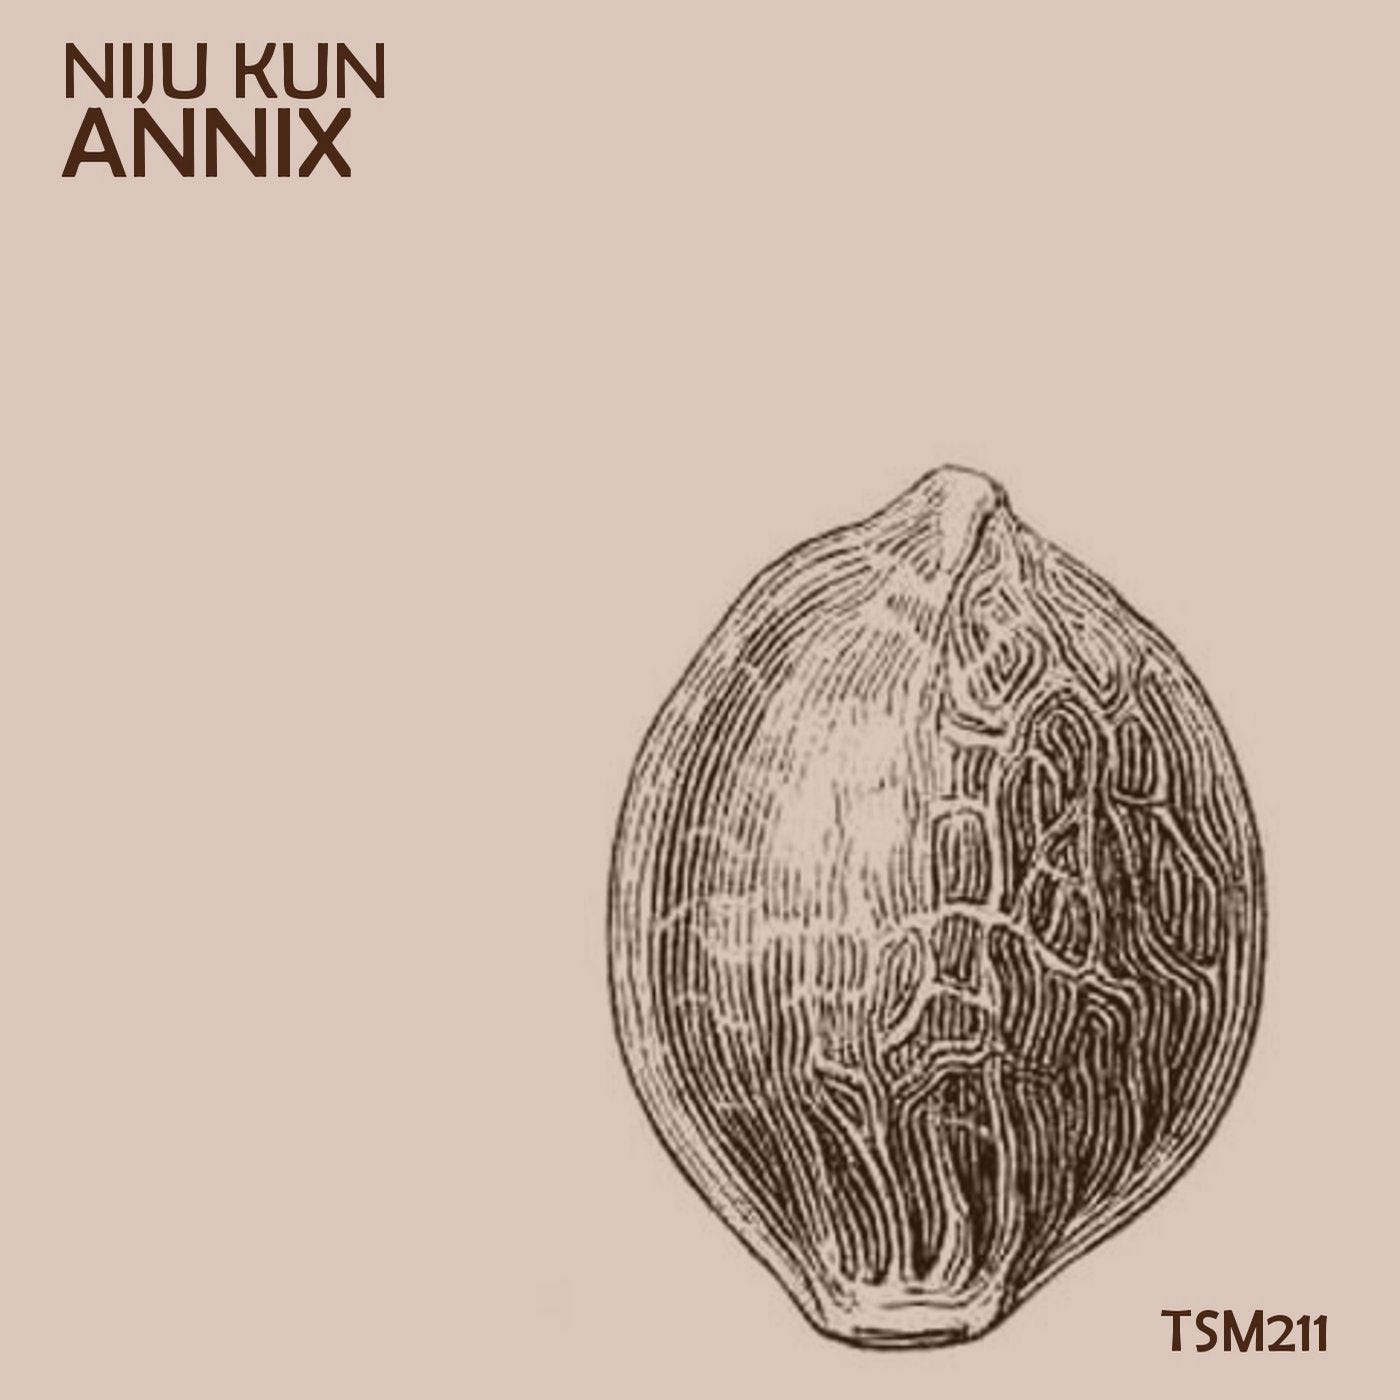 Niju Kun